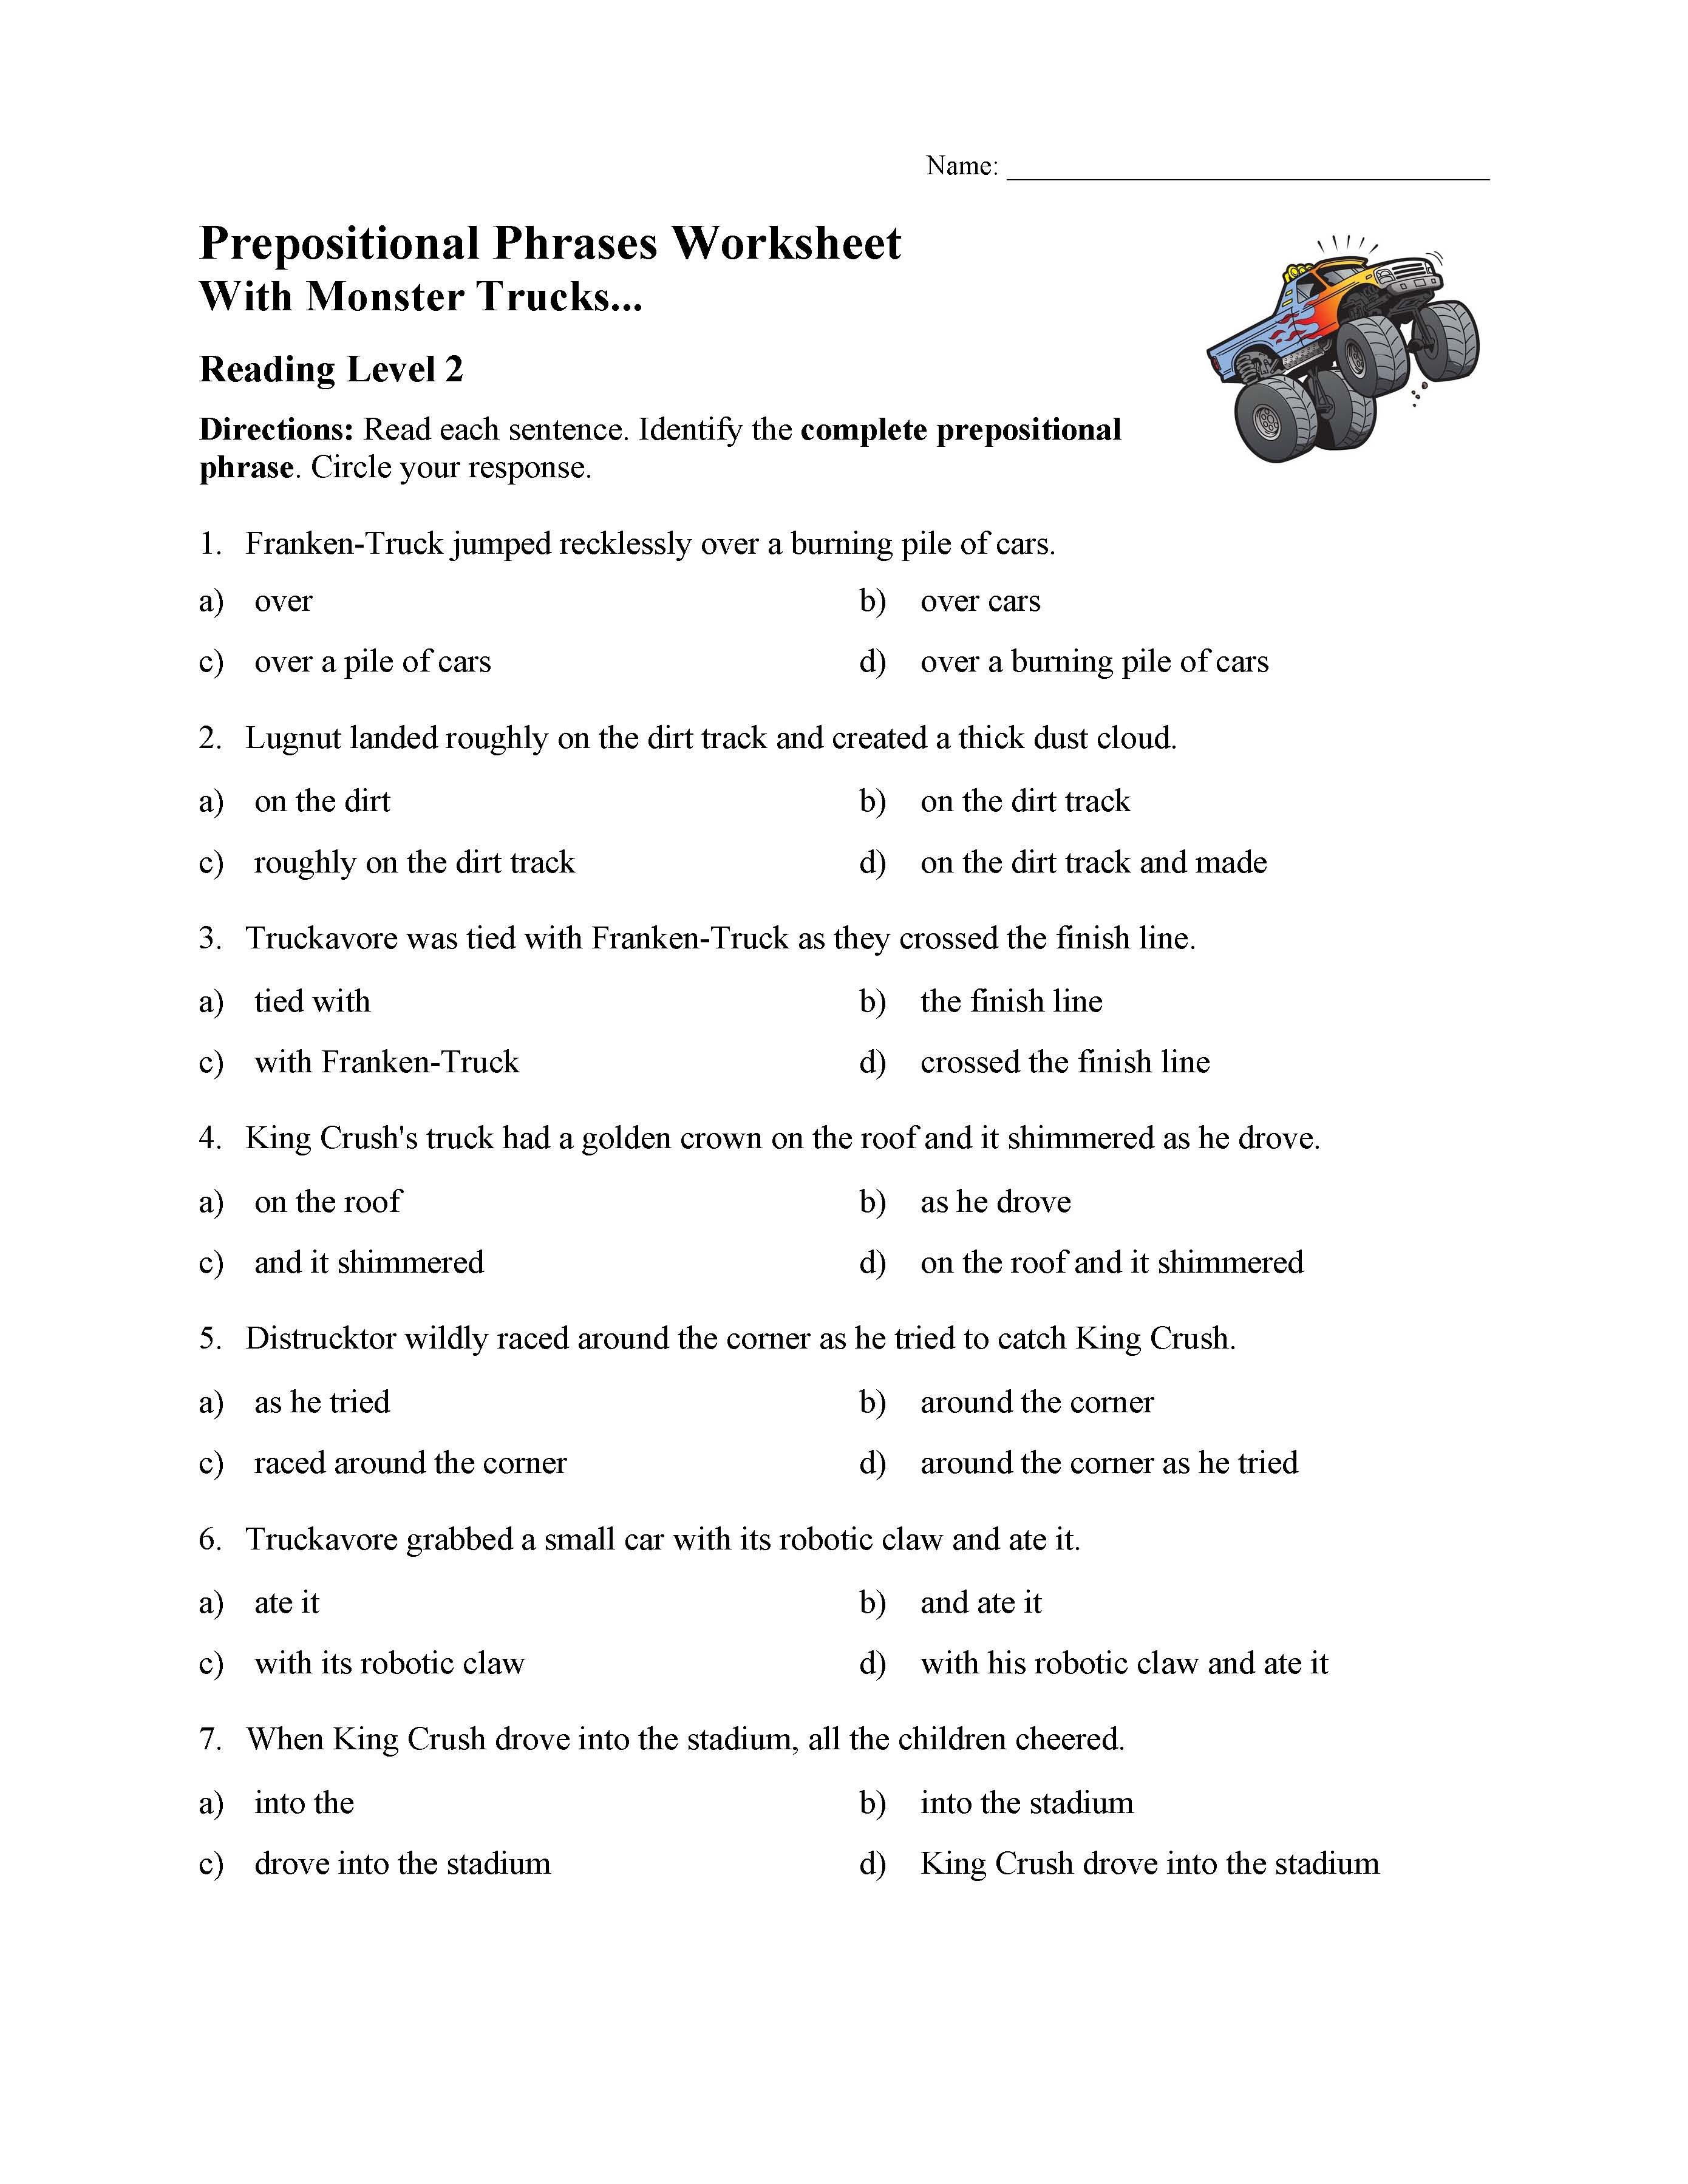 prepositional-phrases-worksheet-1-reading-level-2-preview